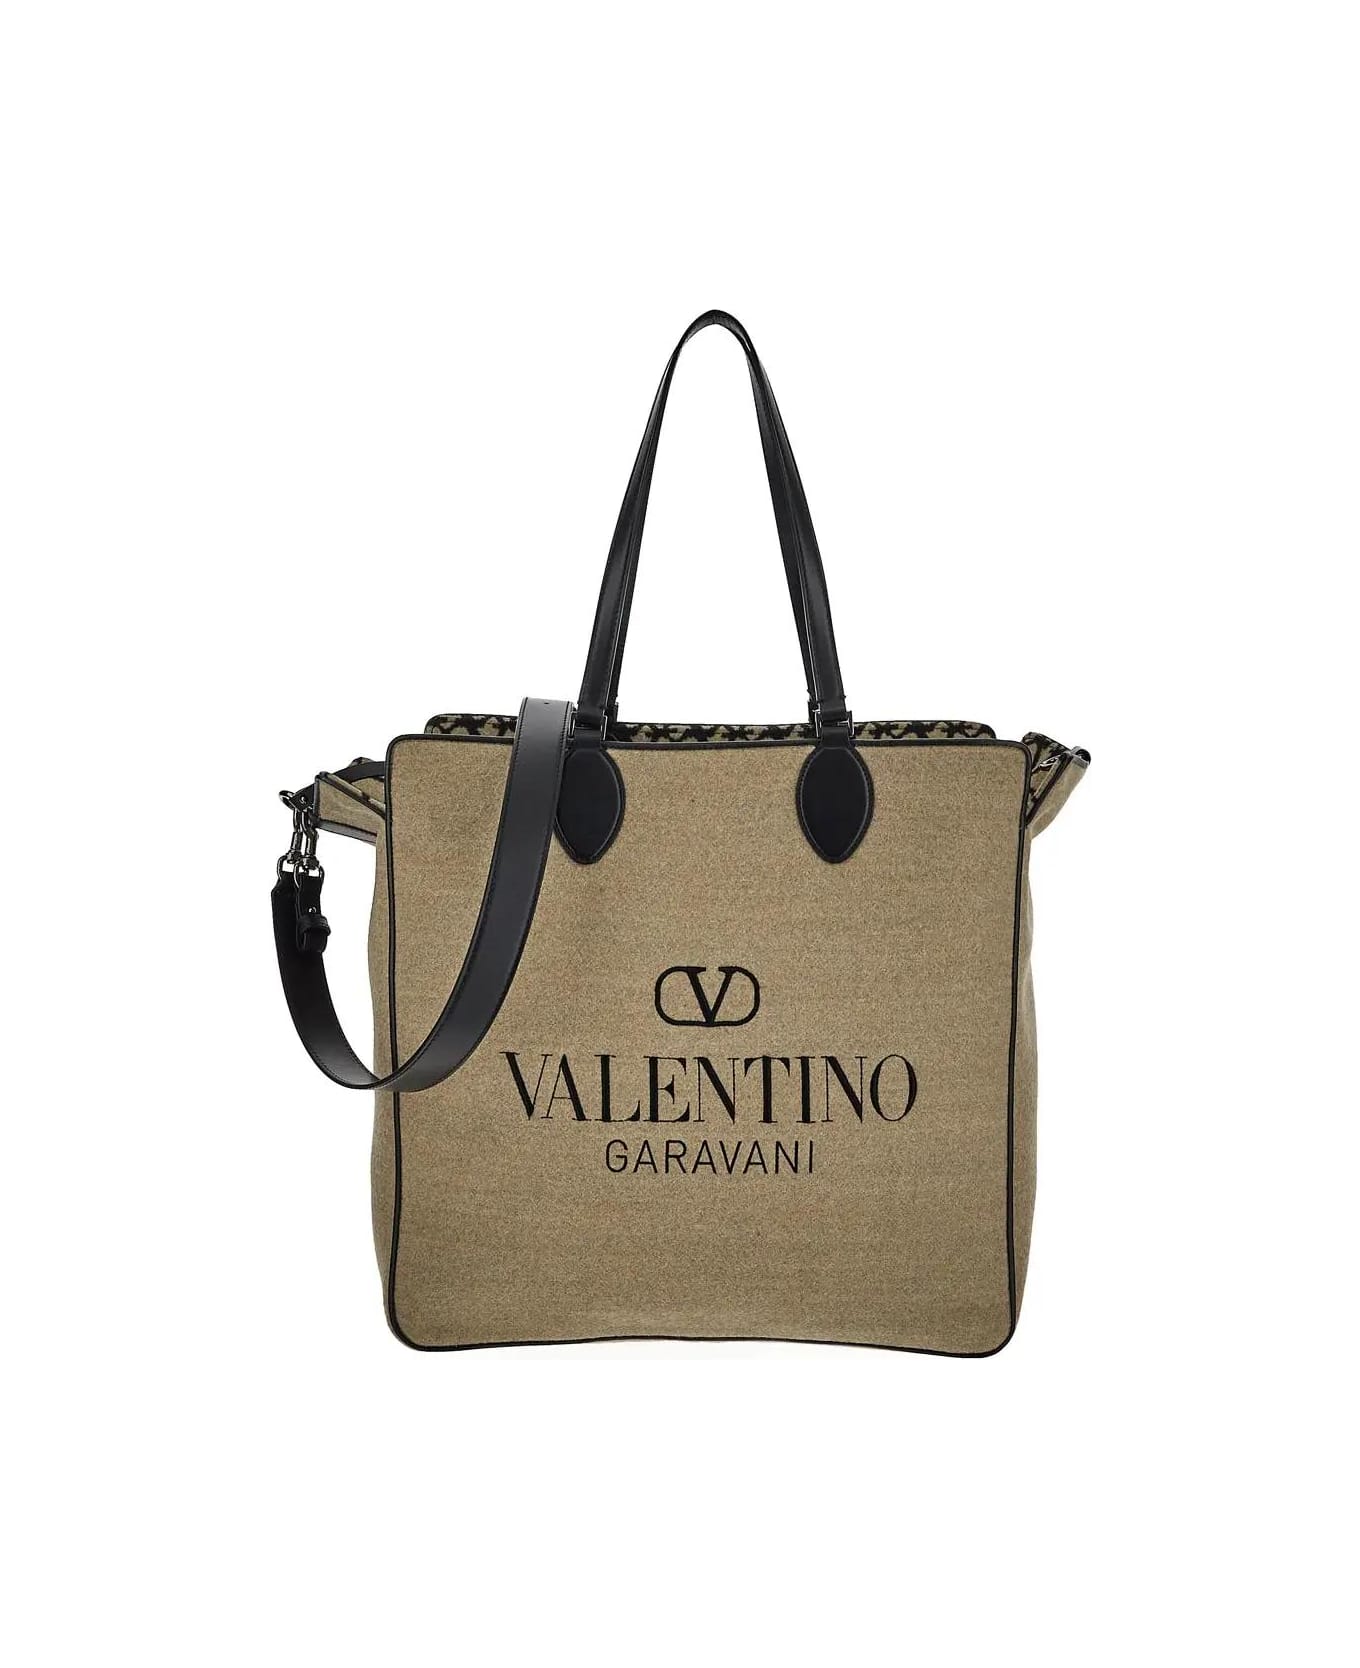 Valentino Garavani Toile Iconographe Bag - Beige